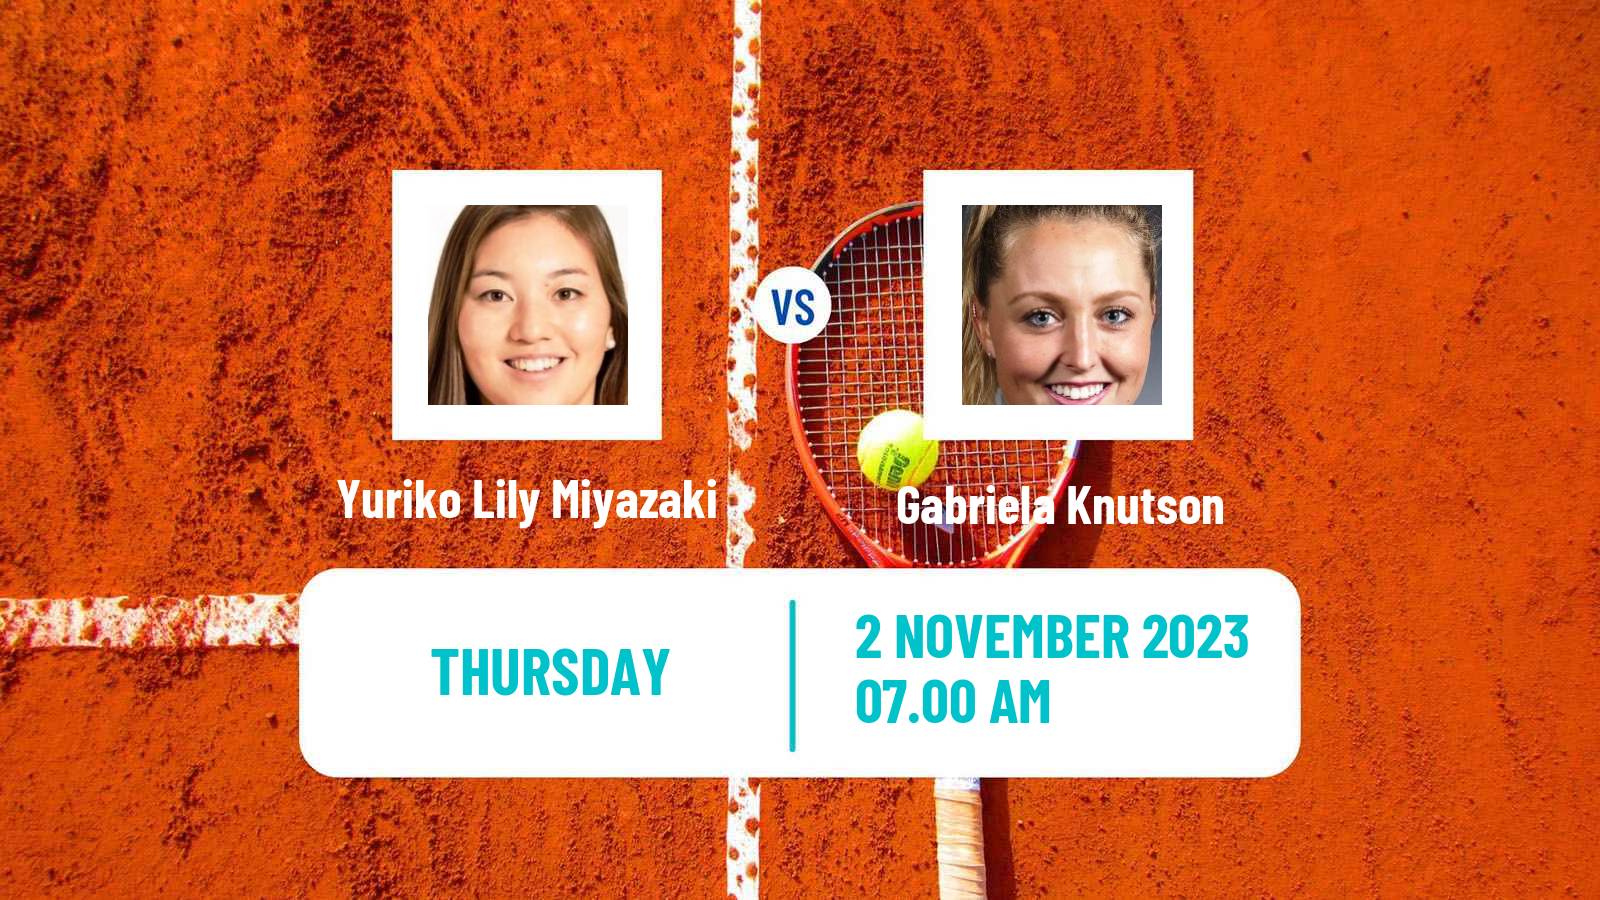 Tennis ITF W60 Nantes Women Yuriko Lily Miyazaki - Gabriela Knutson